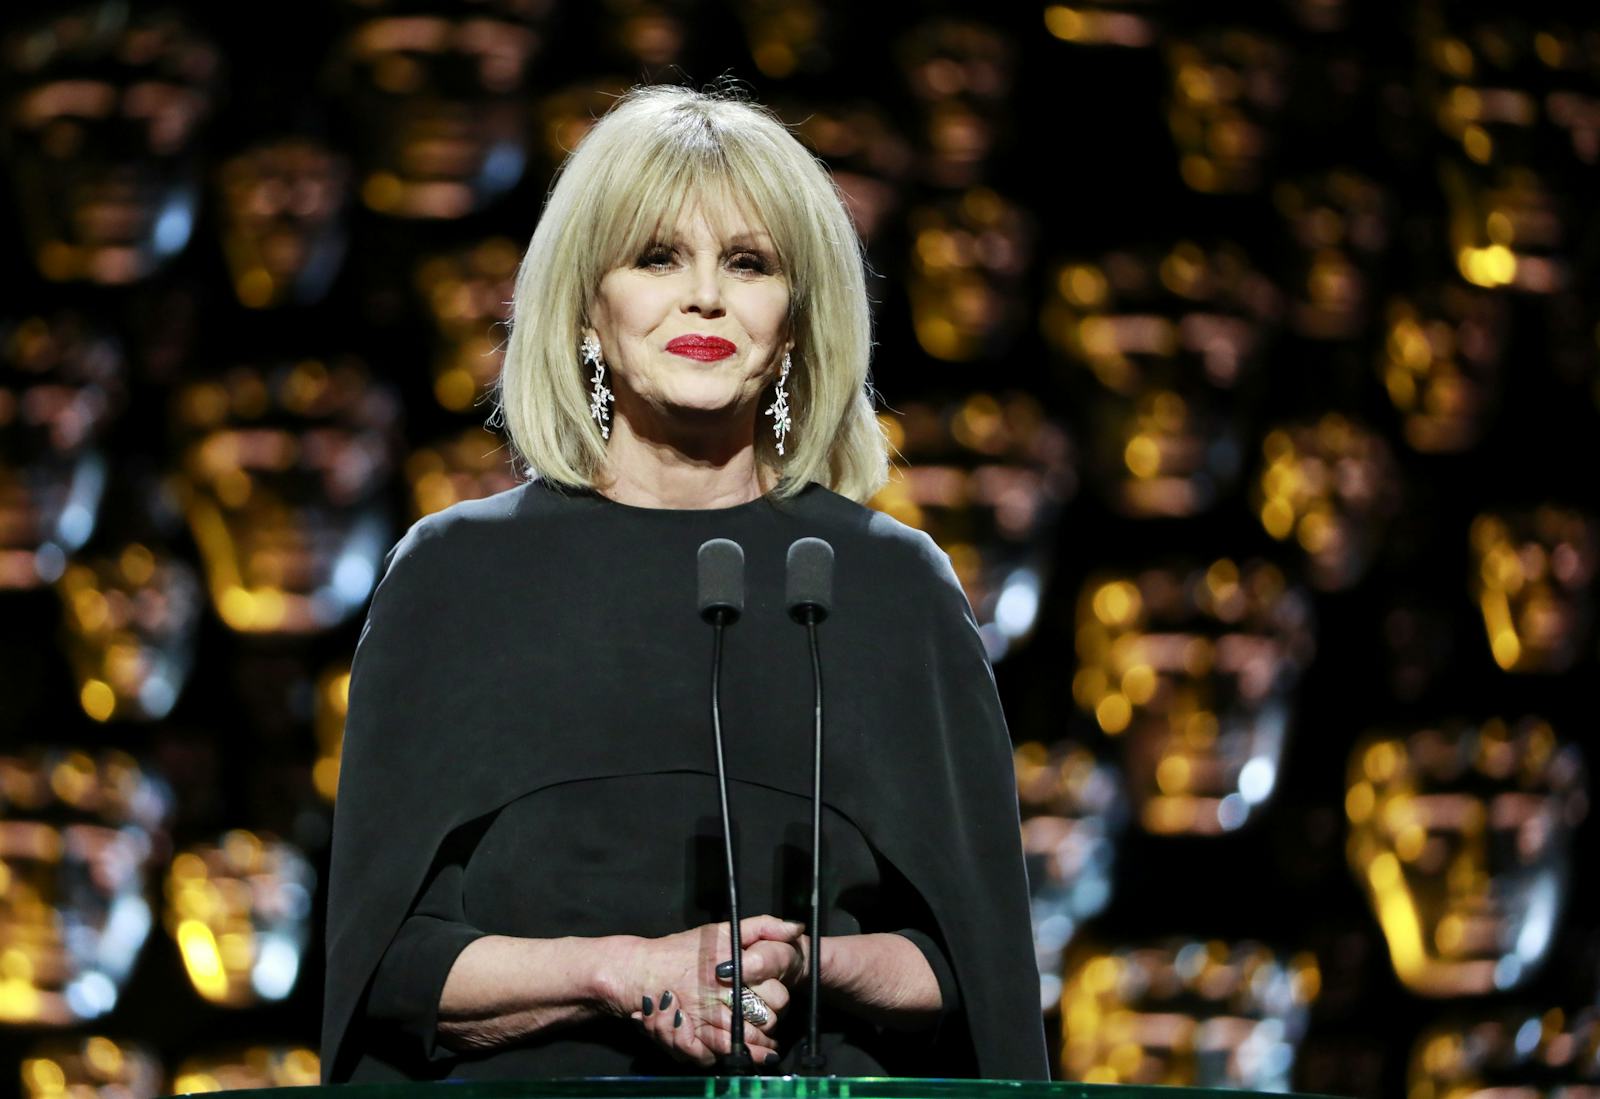 Is The BAFTAs 2019 Ceremony Shown Live? The Prestigious Awards Show